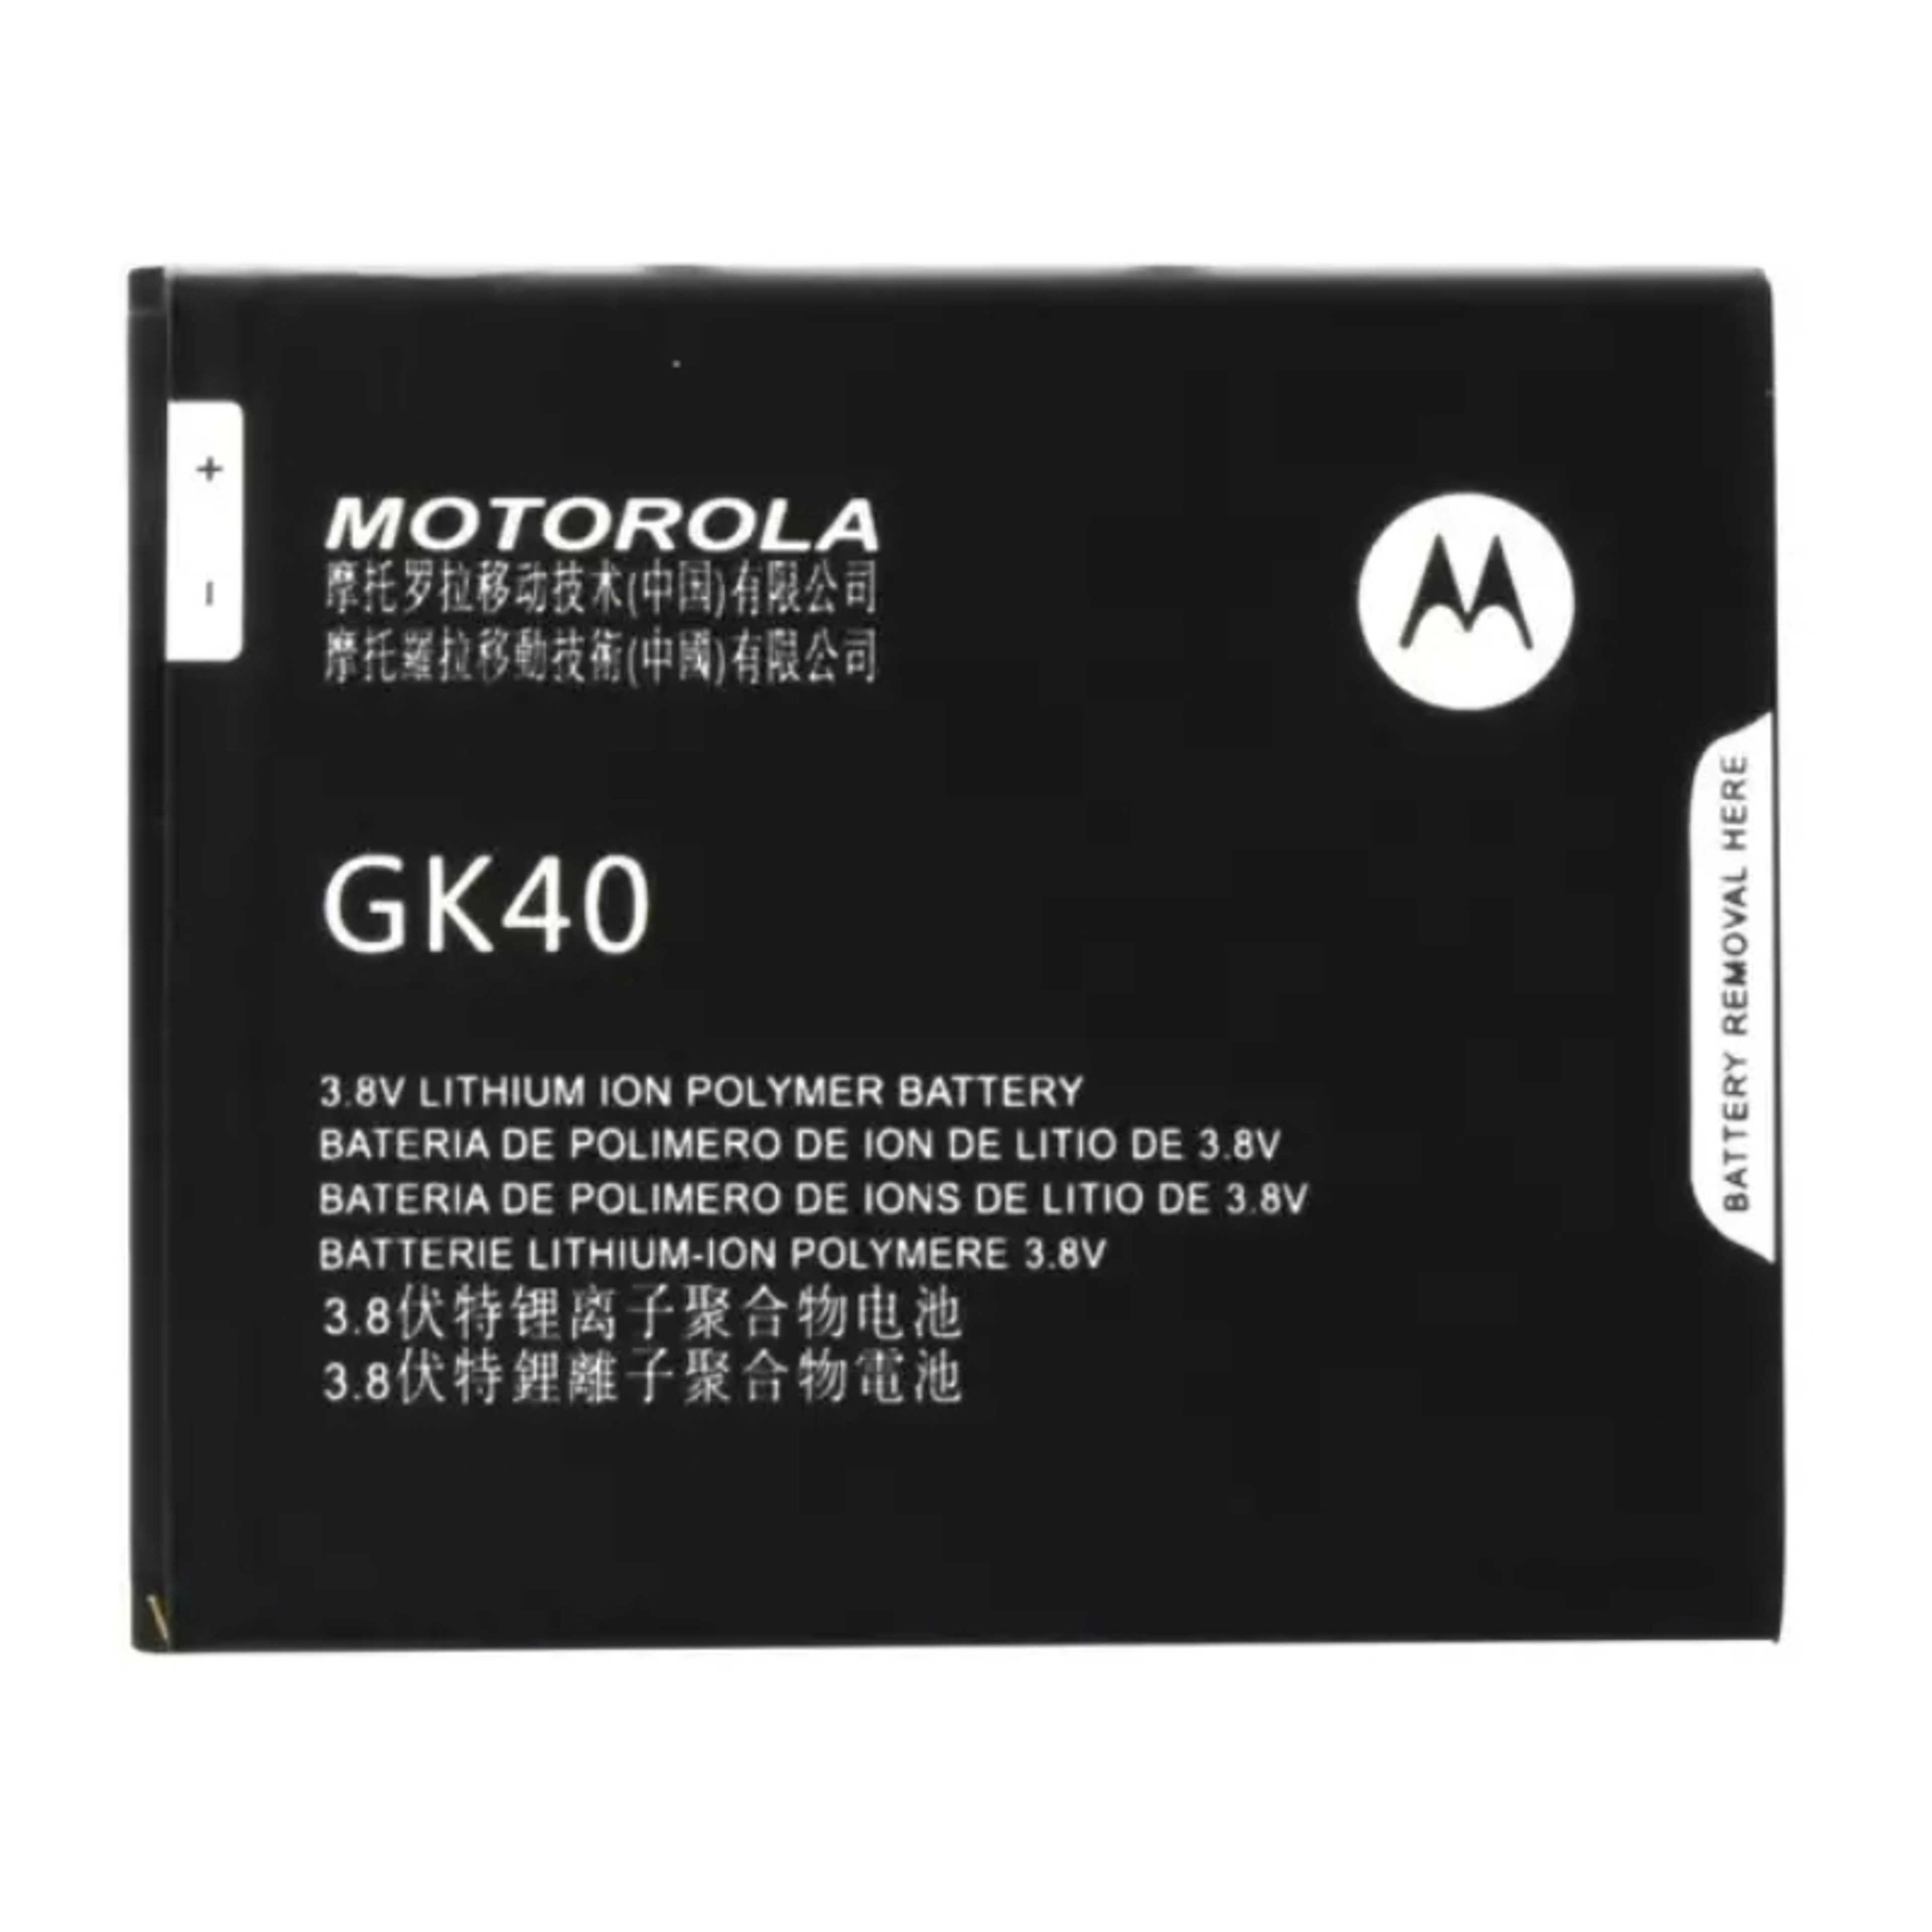 GK40 Battery SNN5976A For Motorola Moto G4 Play XT1607 XT1609 XT1600 Capacity 2800mAh-Black